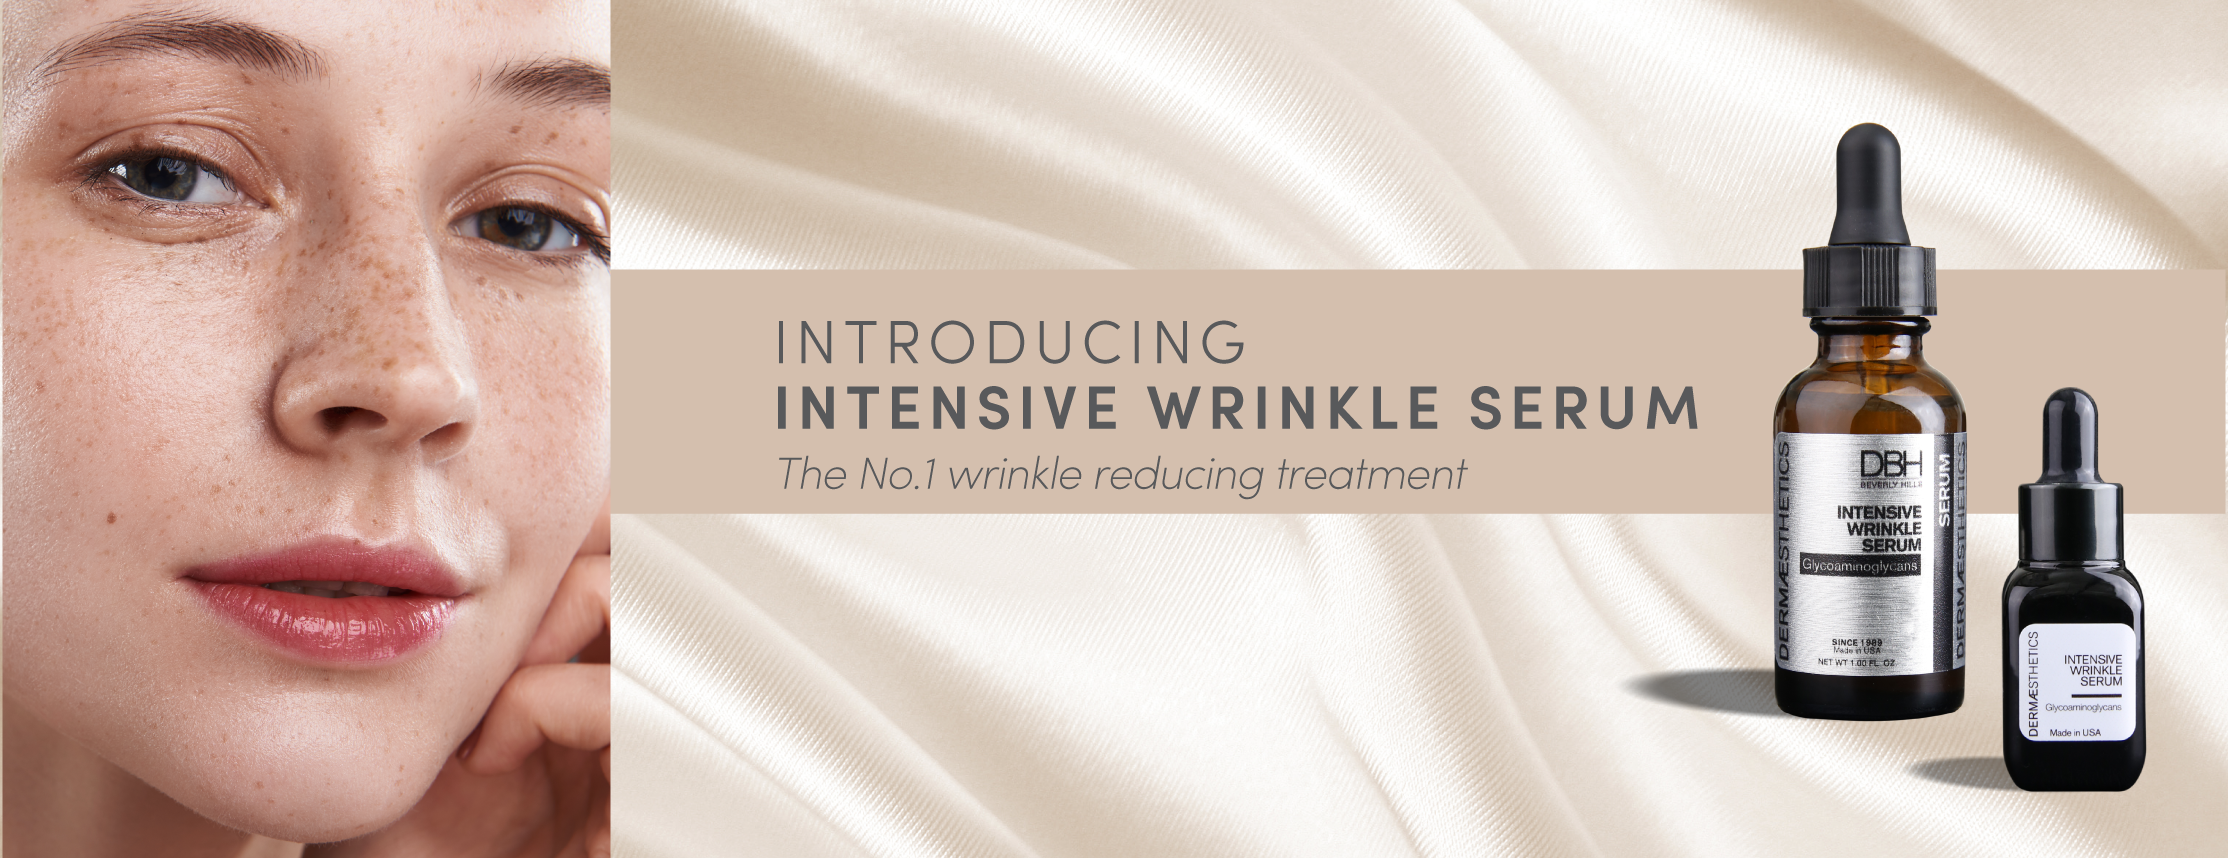 Dermaesthetics Announces Launch of New Intensive Wrinkle Serum